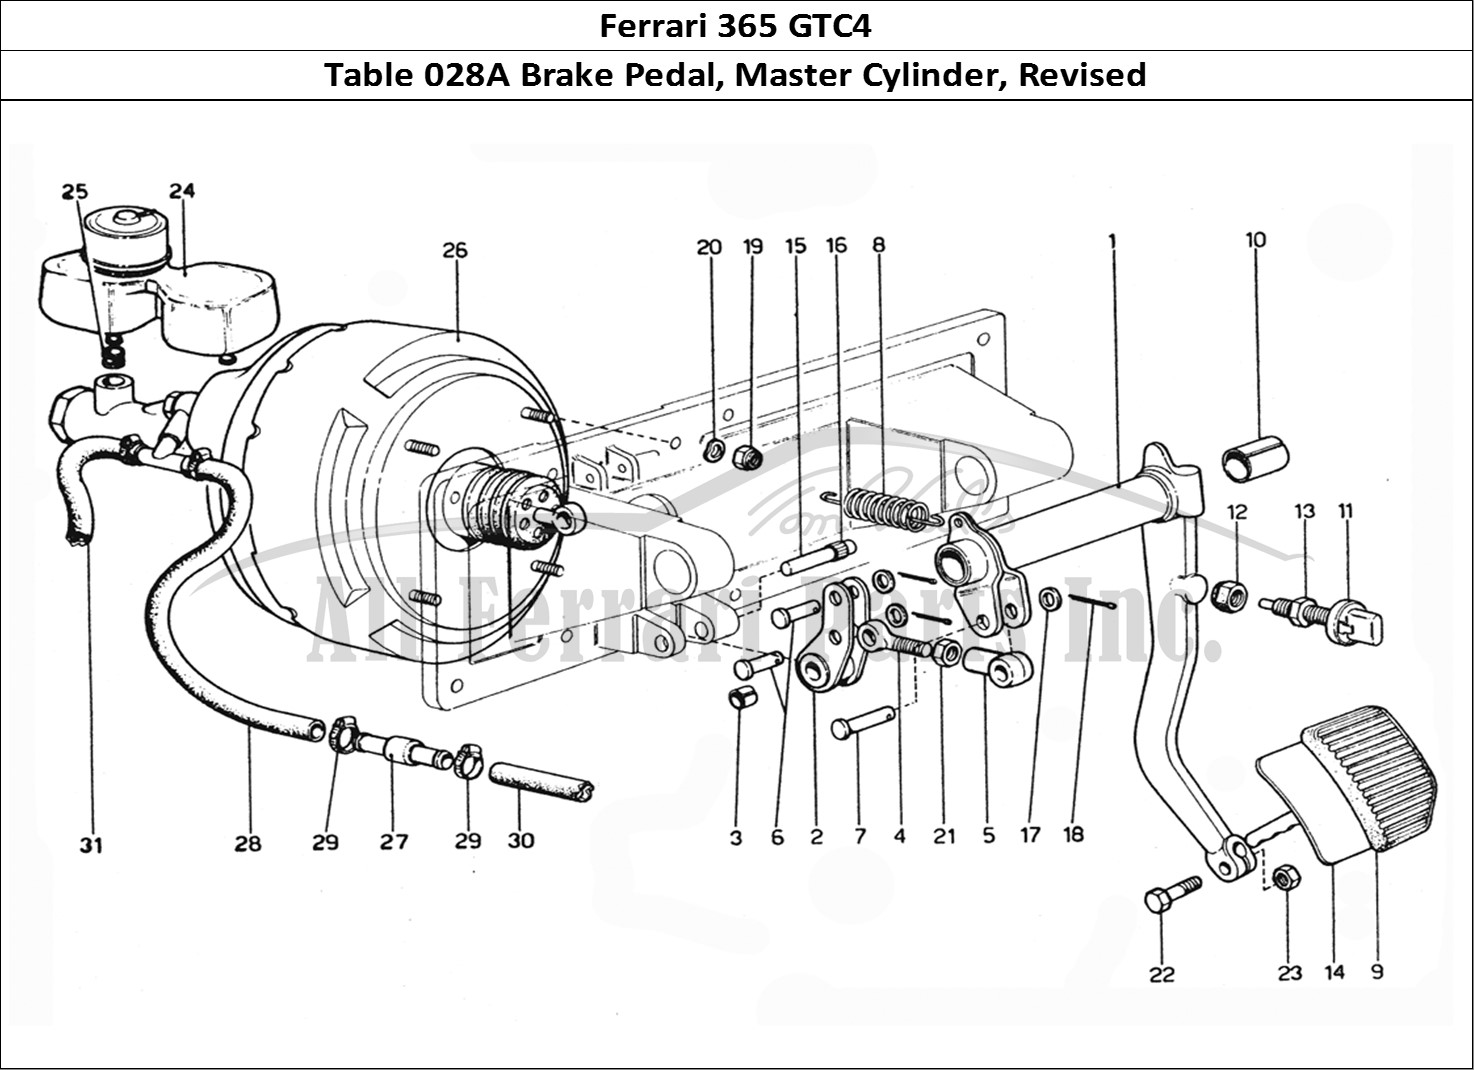 Ferrari Parts Ferrari 365 GTC4 (Mechanical) Page 028 Brake pedal & Brake maste